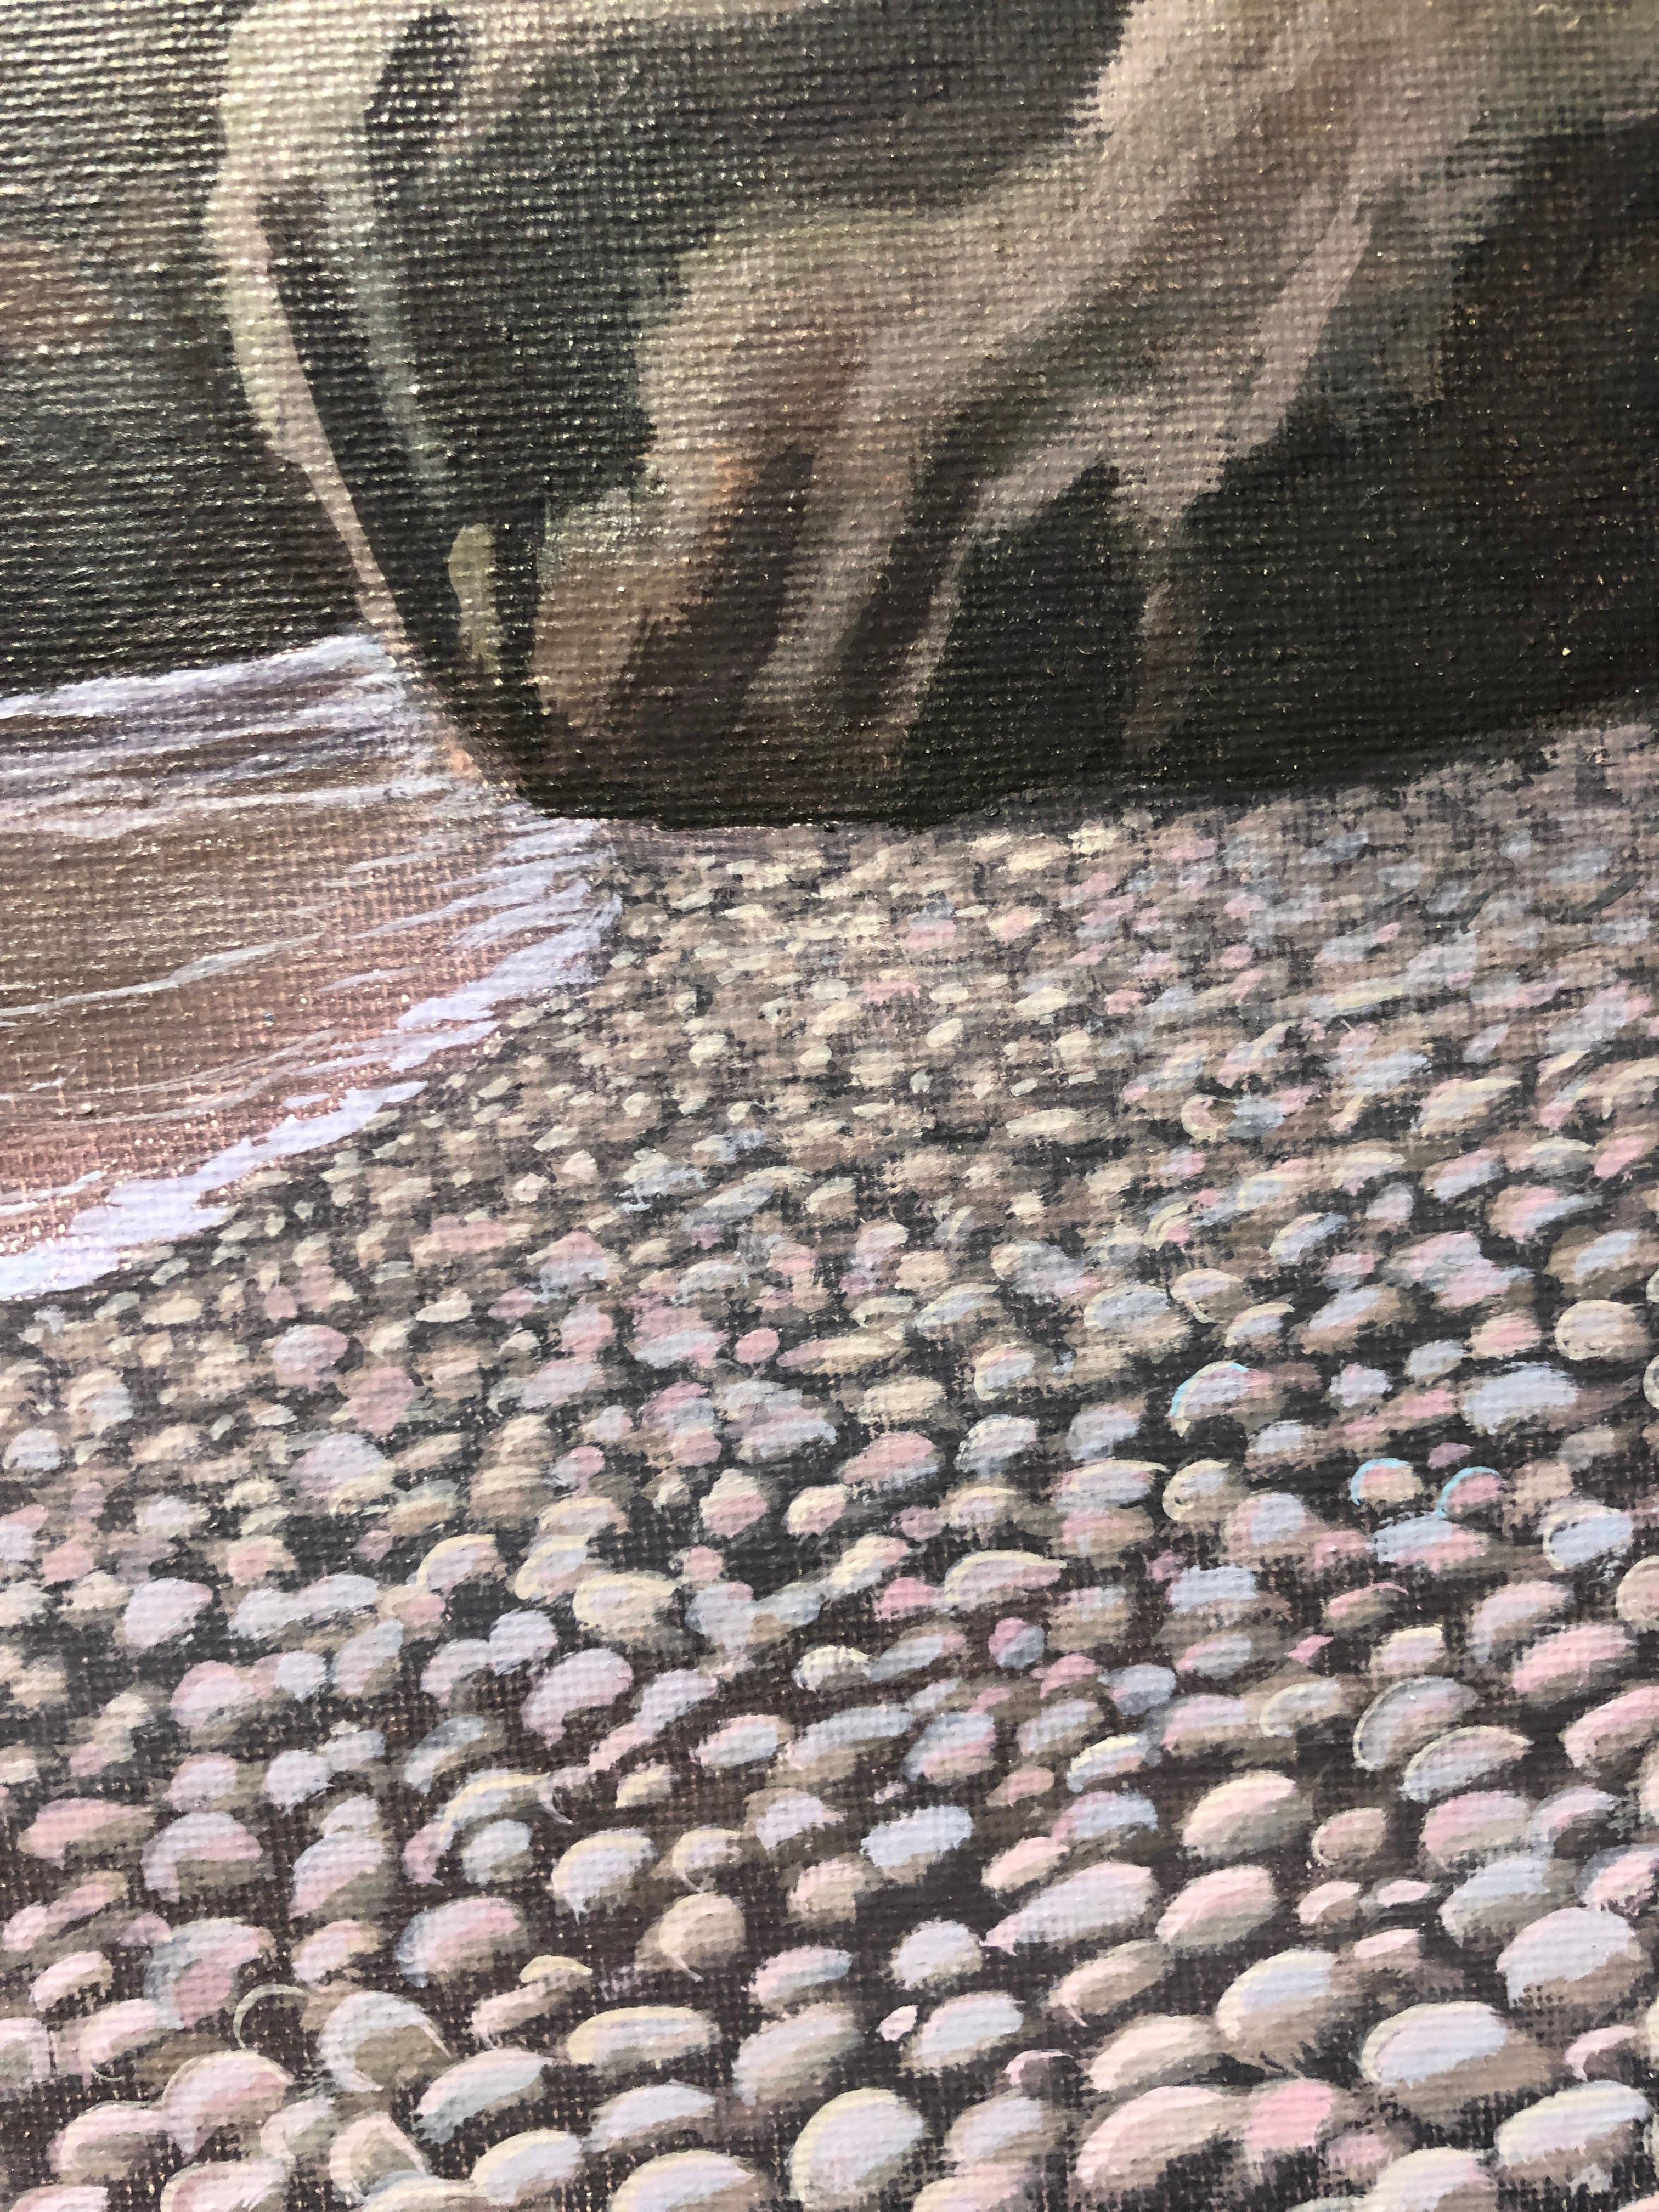  Cala Granadella, Rocky Cliffs Diving into the Ocean, Detailed Surreal Landscape - Gray Landscape Painting by René Monzón Relova “Pozas”